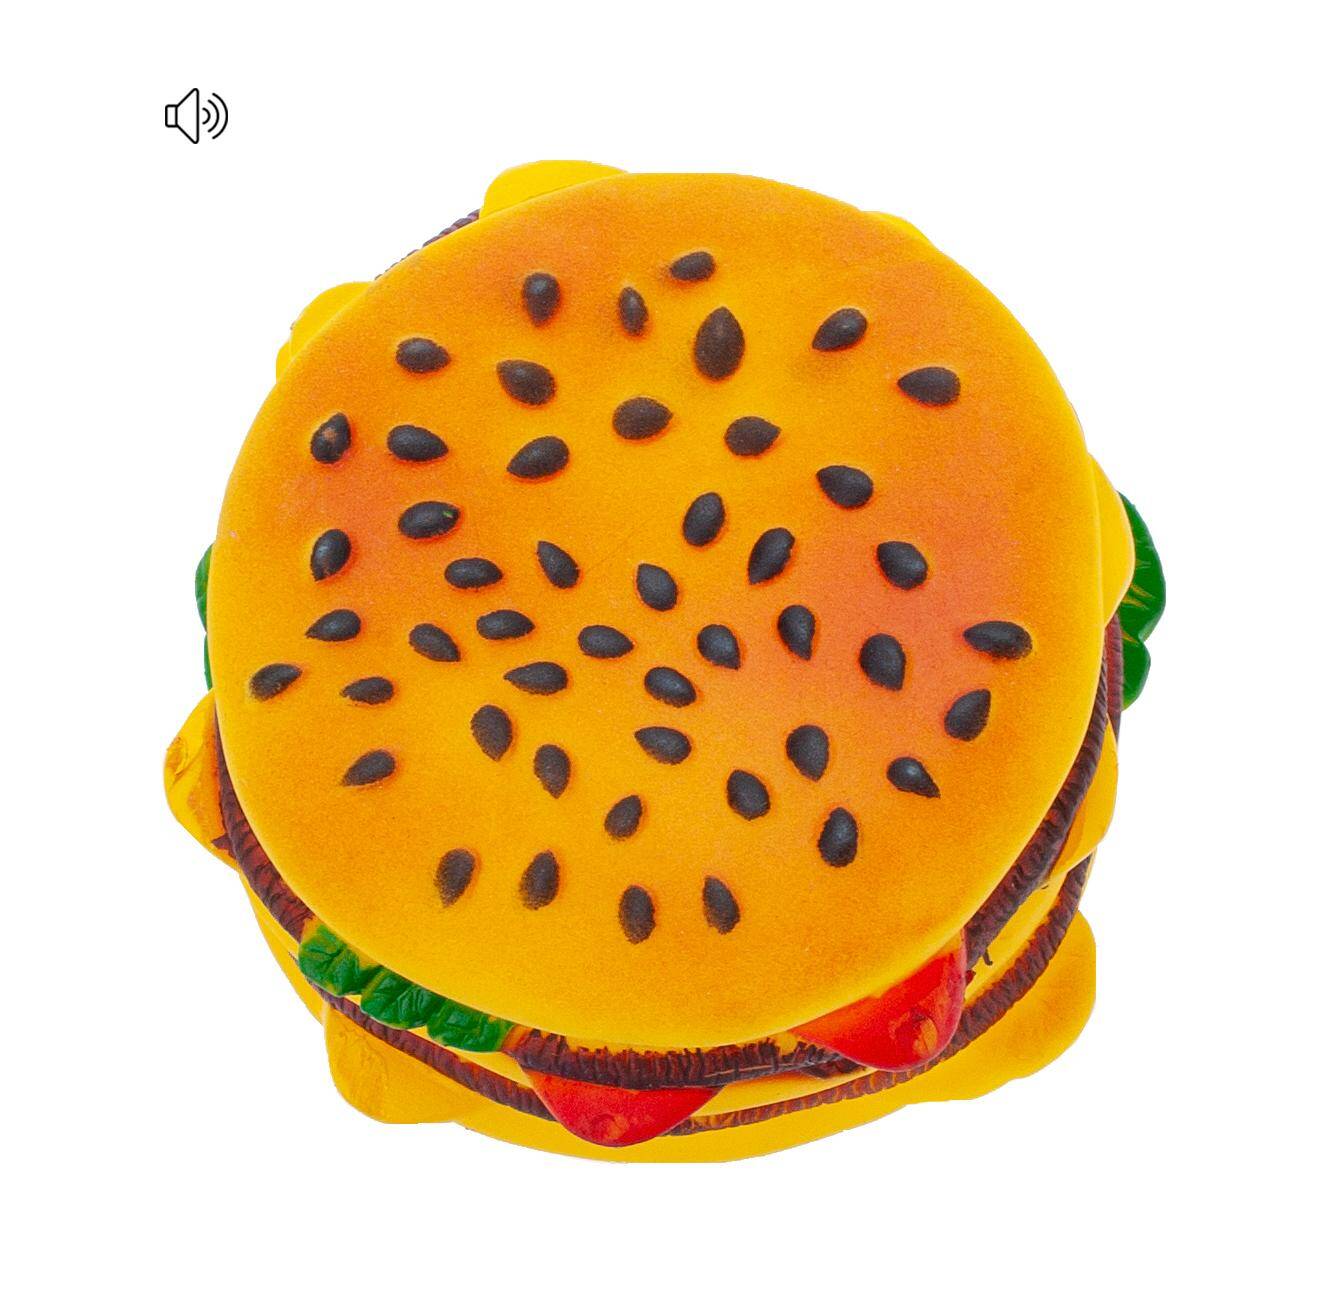 Hamburger with seeds